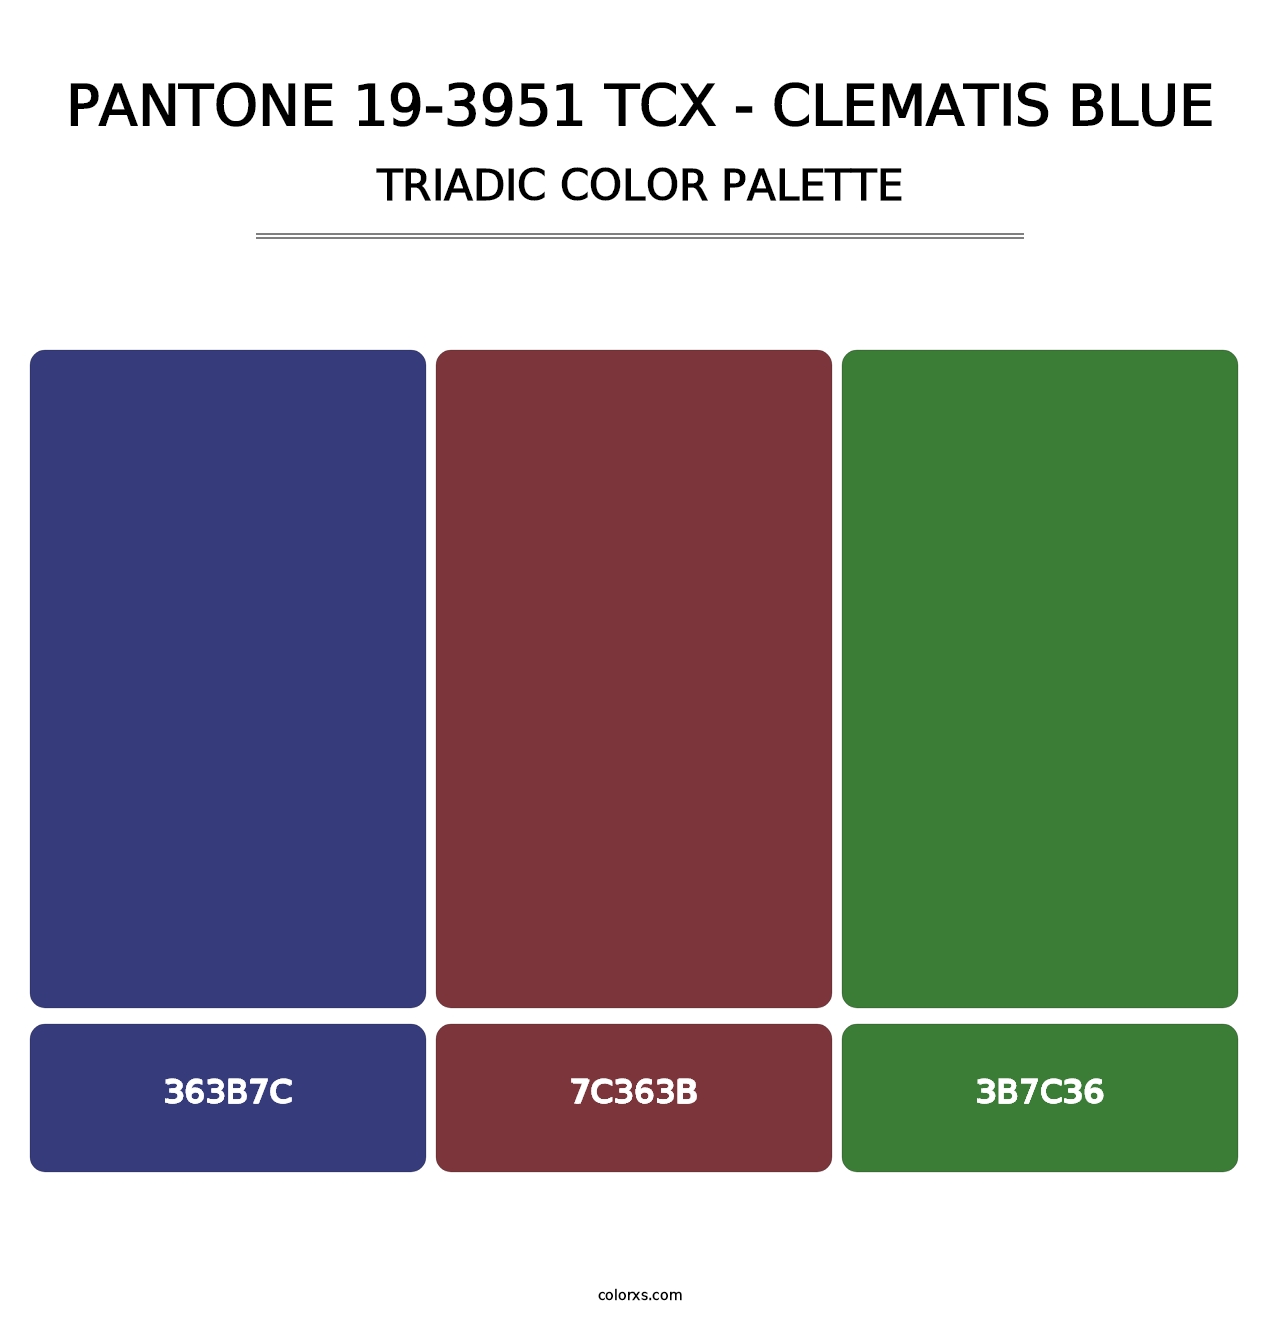 PANTONE 19-3951 TCX - Clematis Blue - Triadic Color Palette